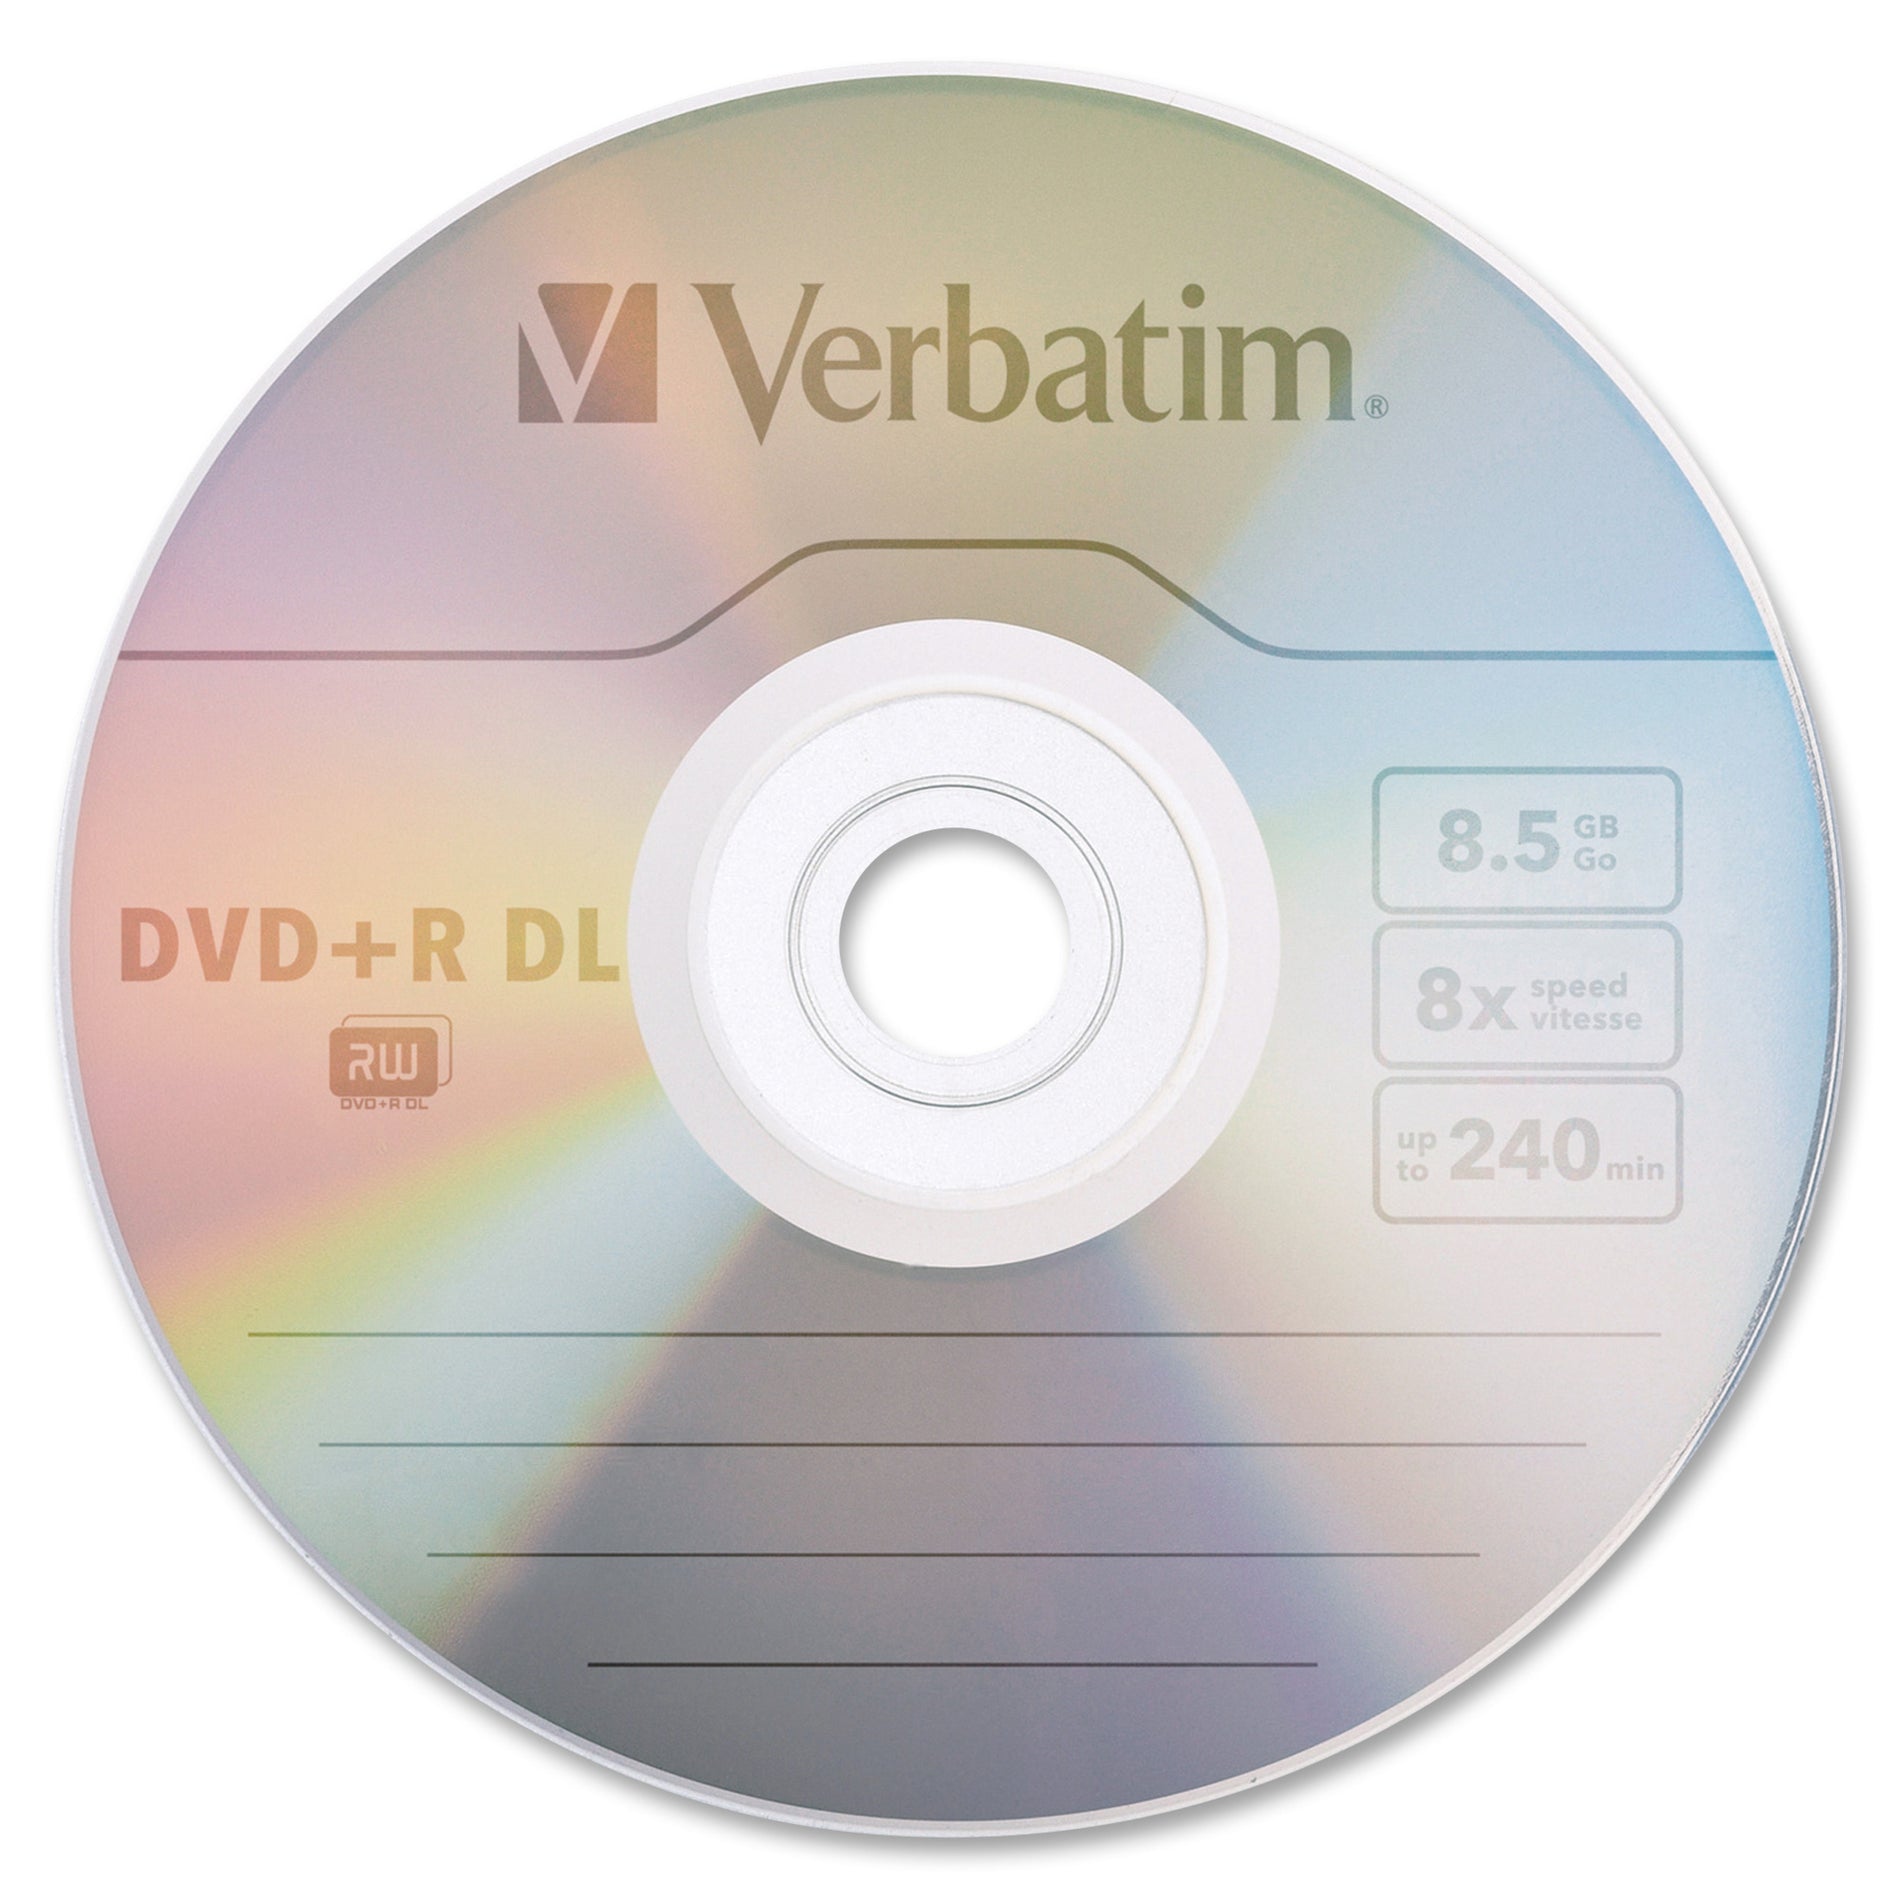 Verbatim 96542 DVD+R DL 8.5GB 8X with Branded Surface - 30pk Spindle, 8.5GB Storage, 8X Write Speed